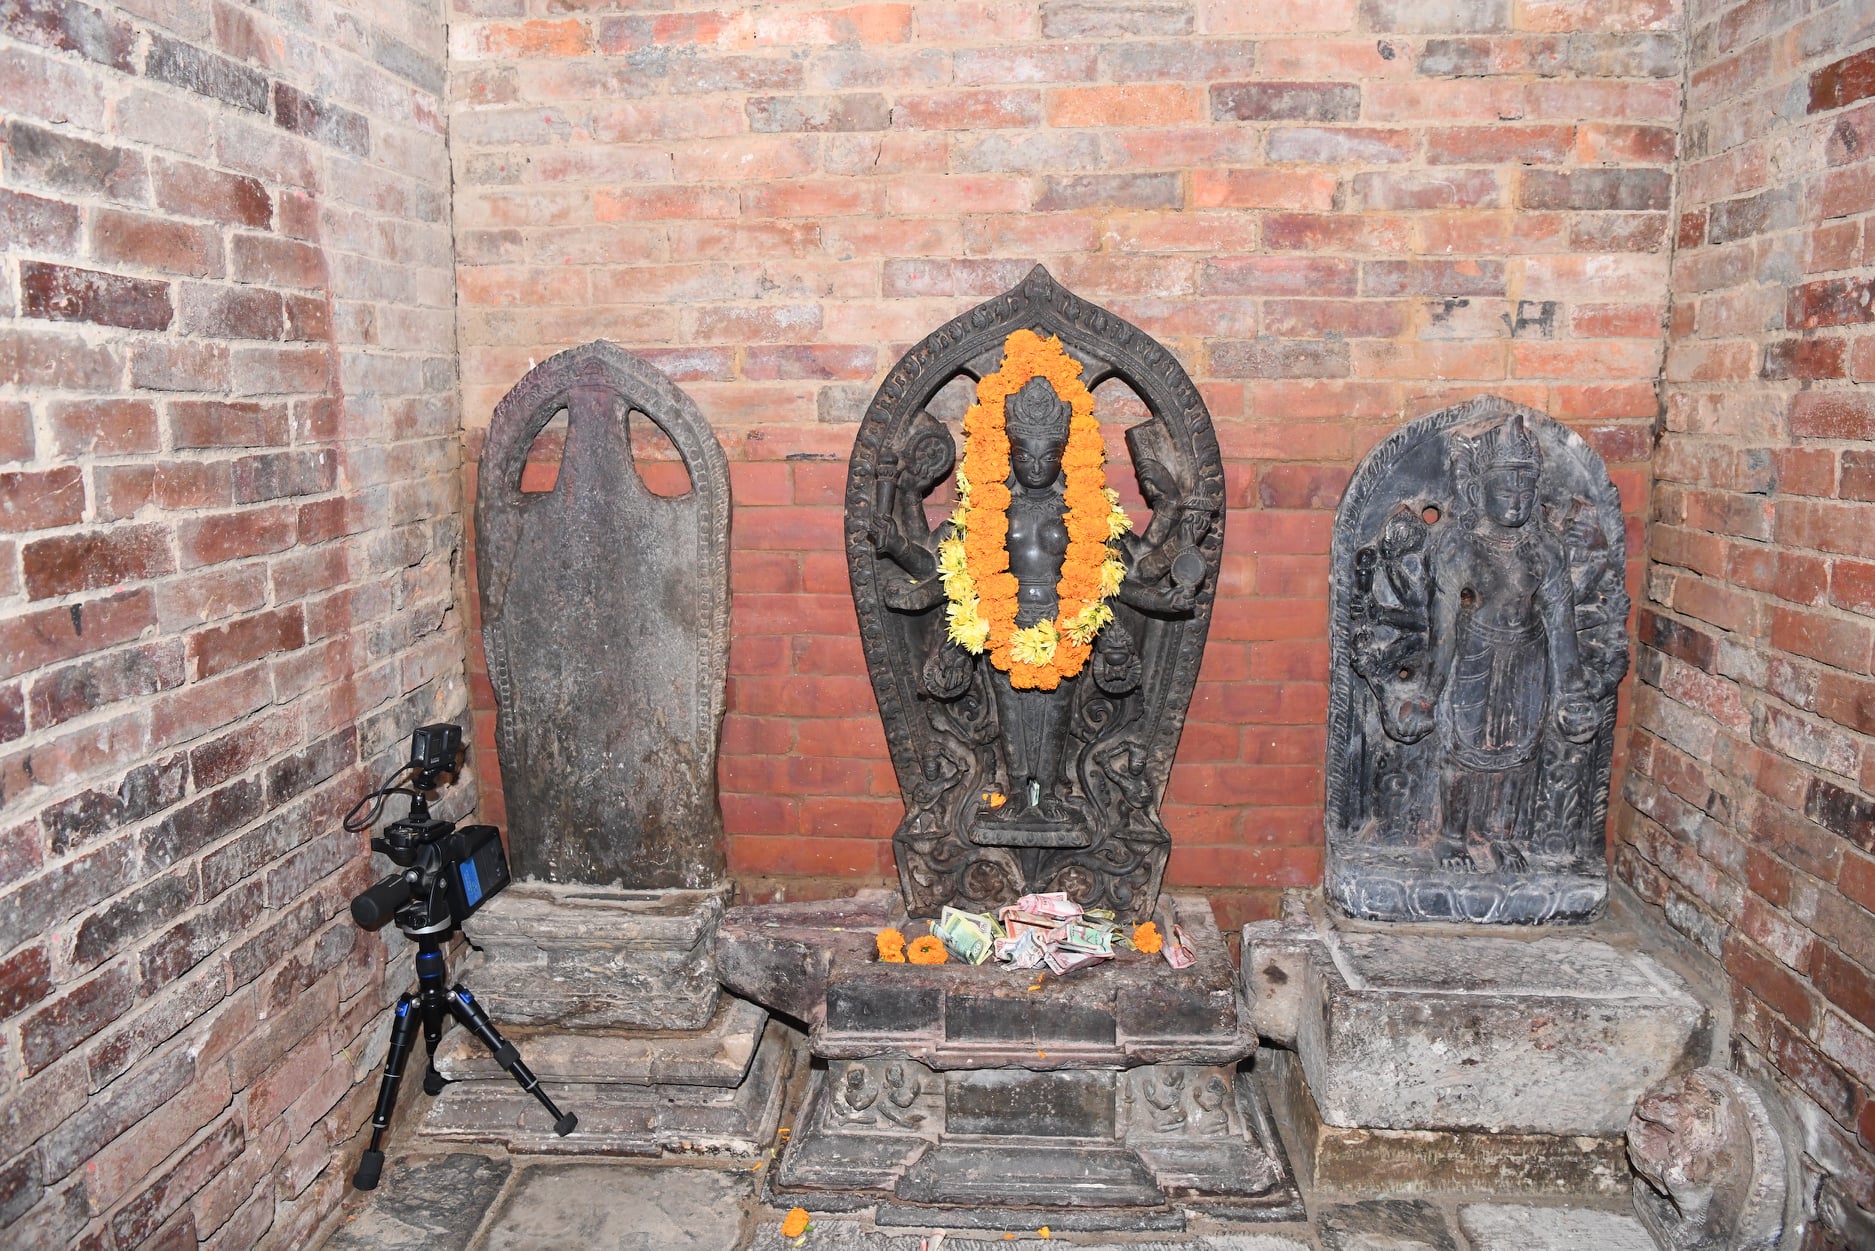 Stolen-yet-retrieved idol of Laxmi-Narayan restored at rightful place in Patan